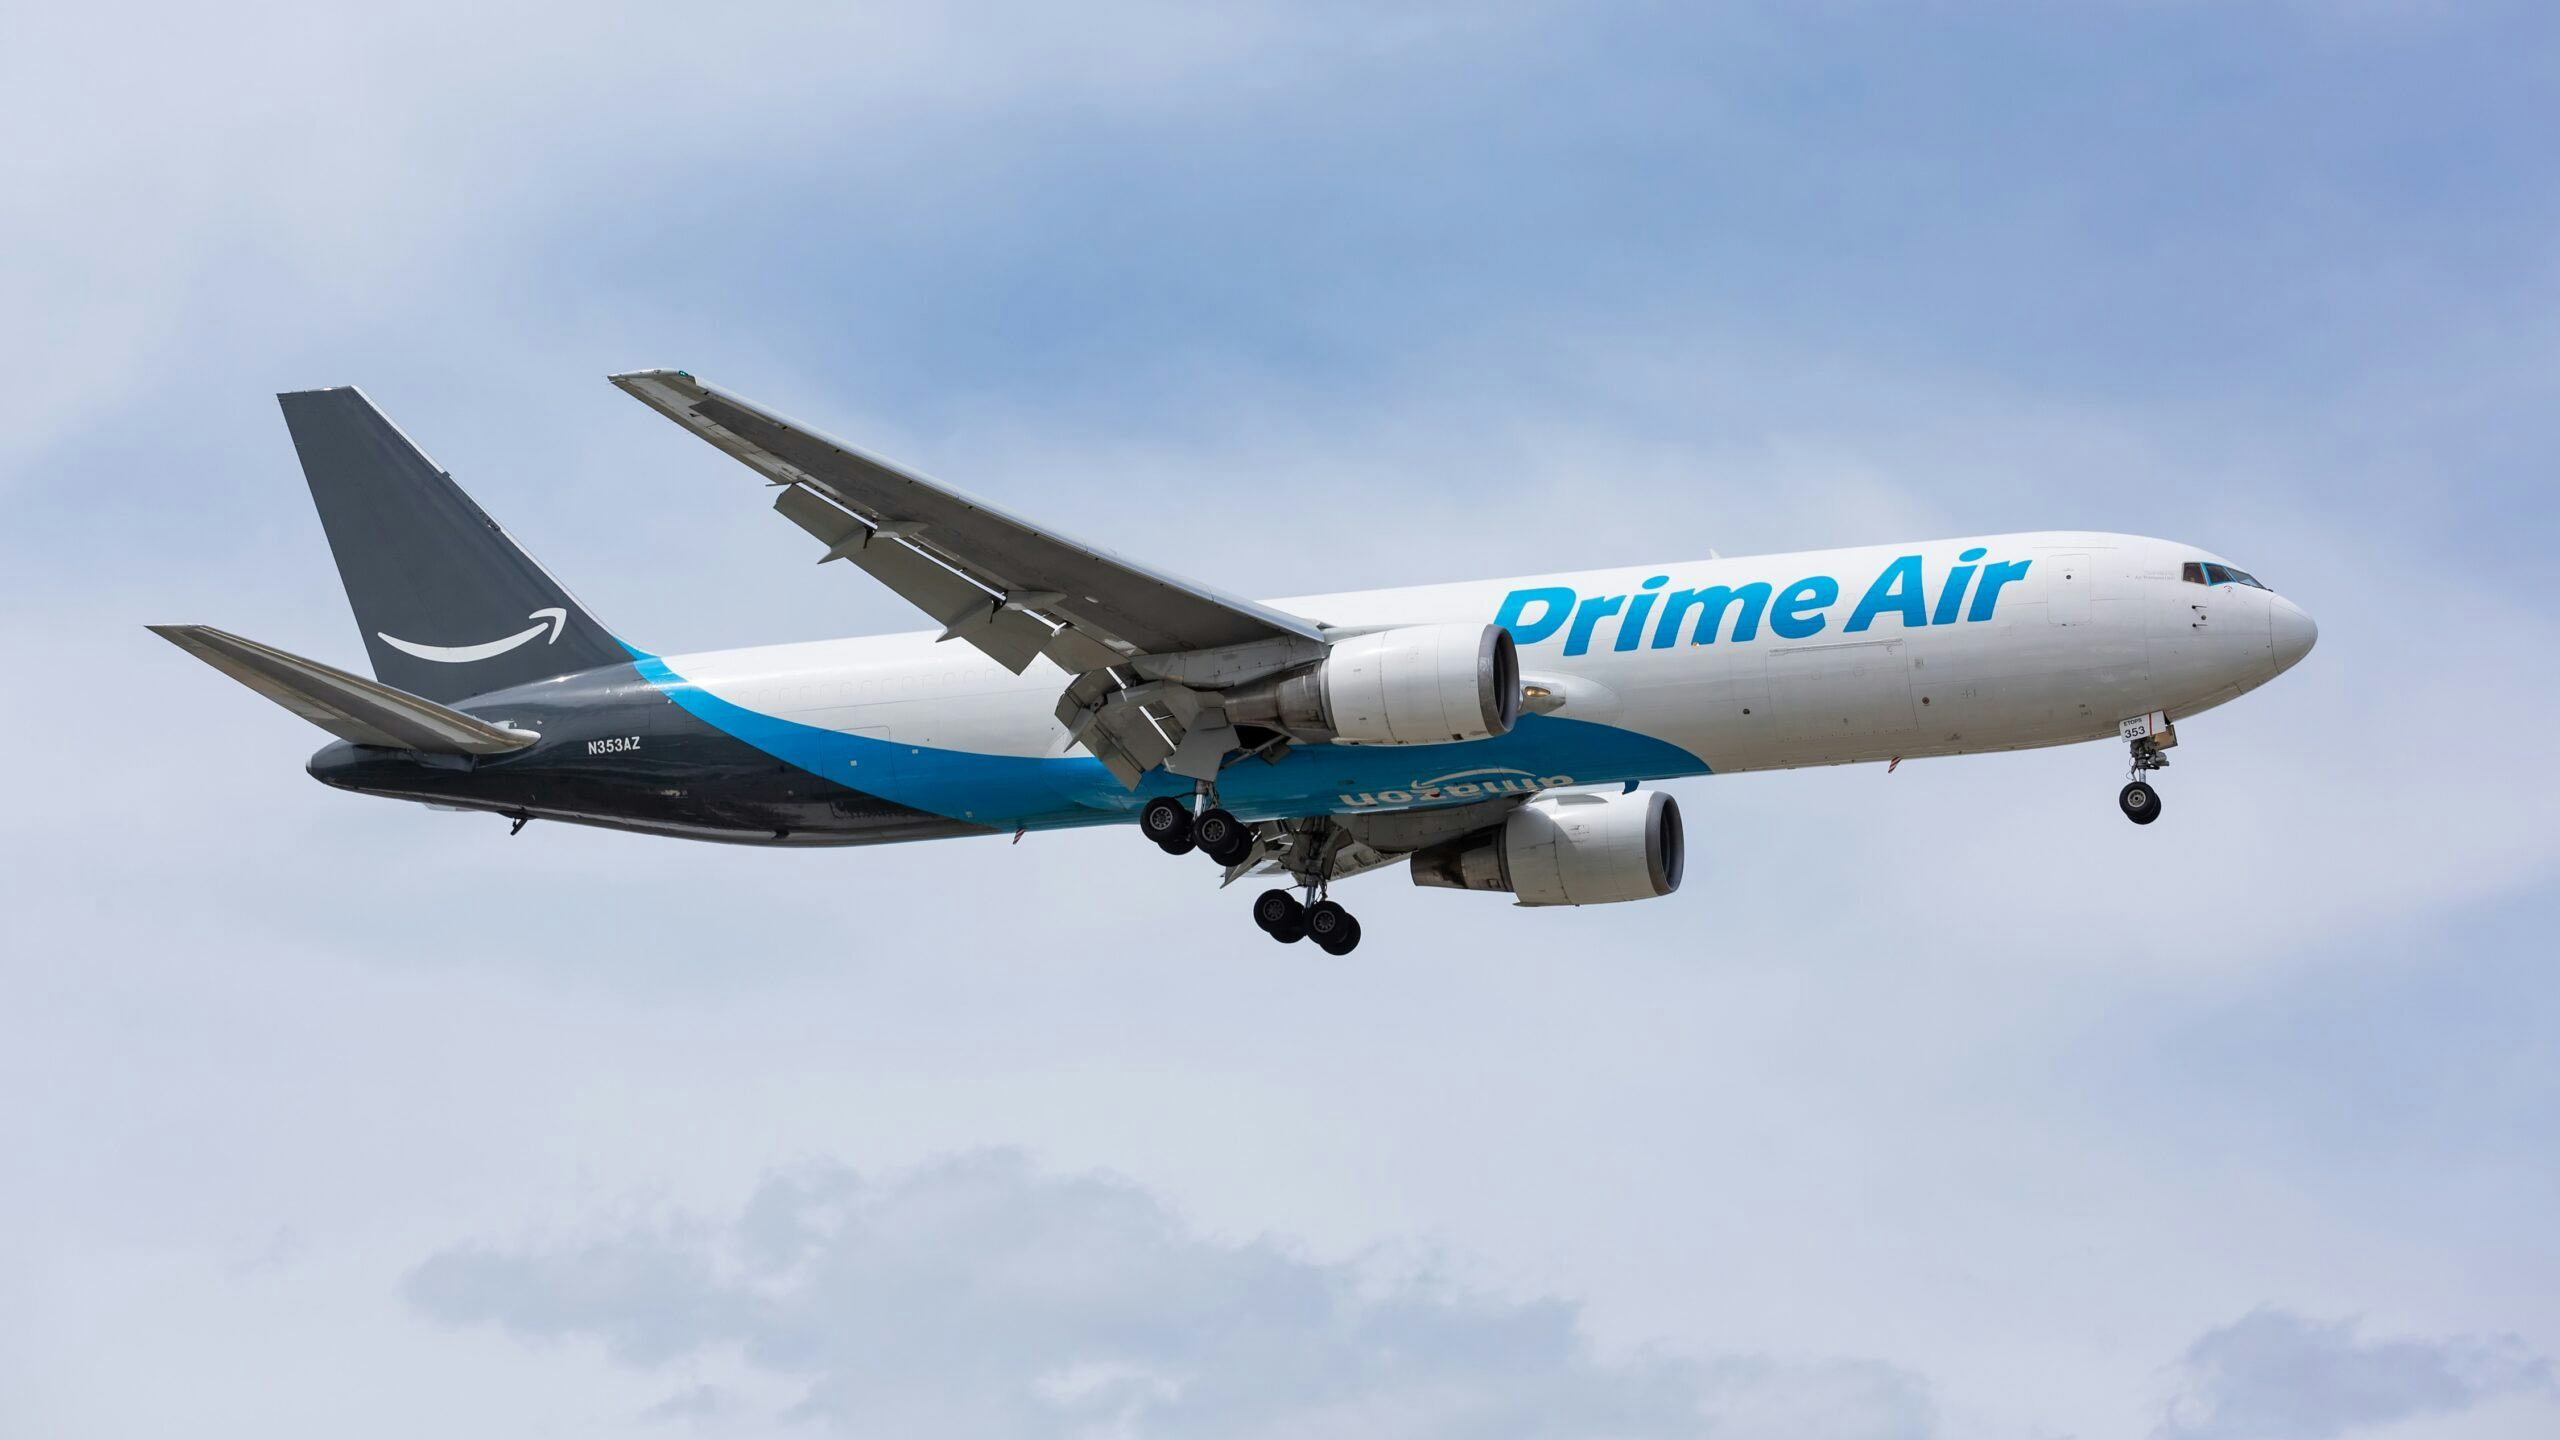 Amazon sluit luchtvrachthub Leipzig - 400 banen op de tocht